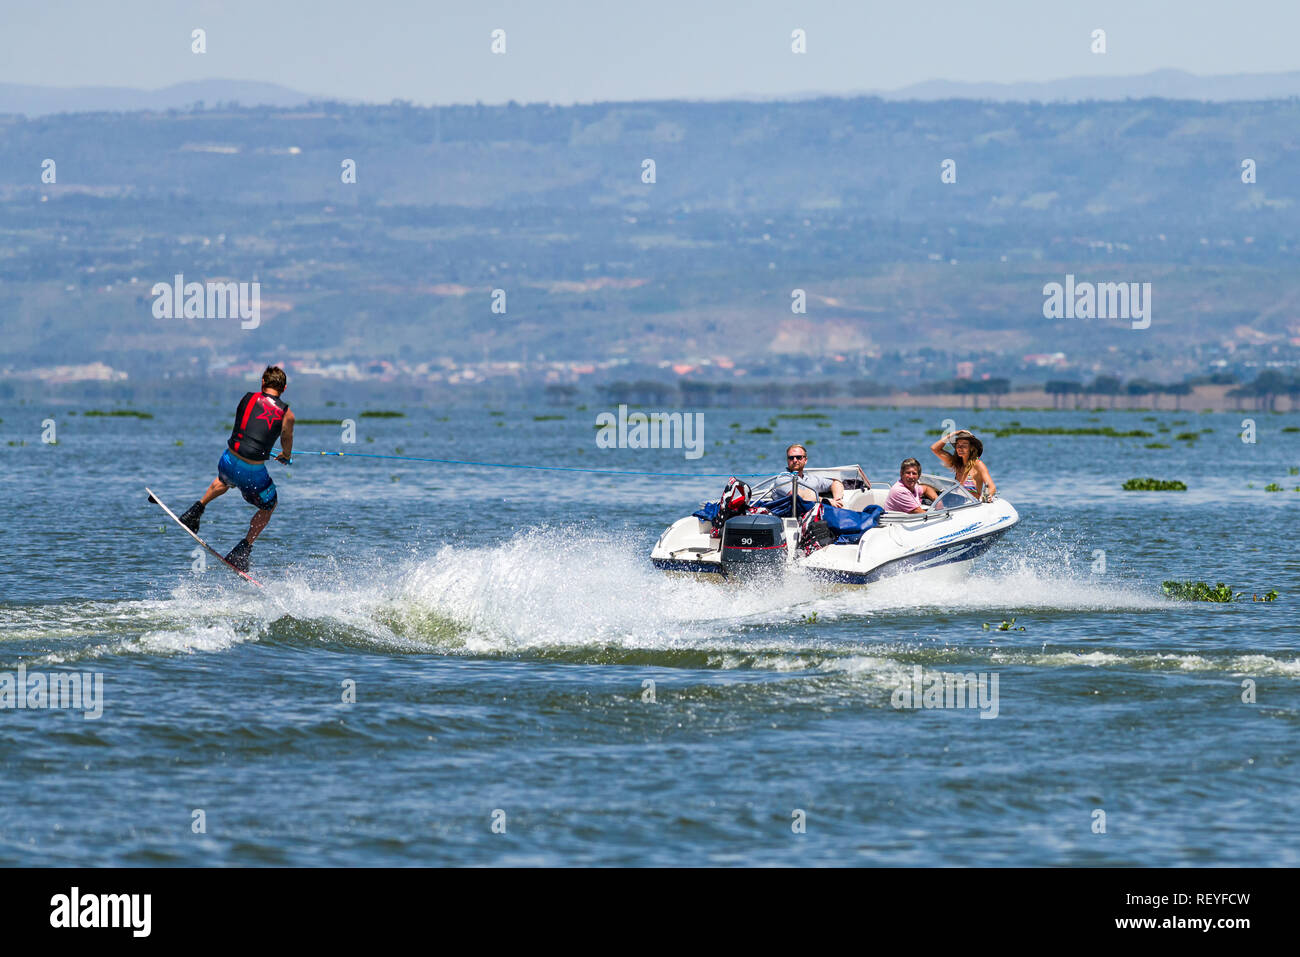 A Caucasian man performing a jump whilst wakeboarding behind a powerboat as passengers watch him, Lake Naivasha, Kenya Stock Photo